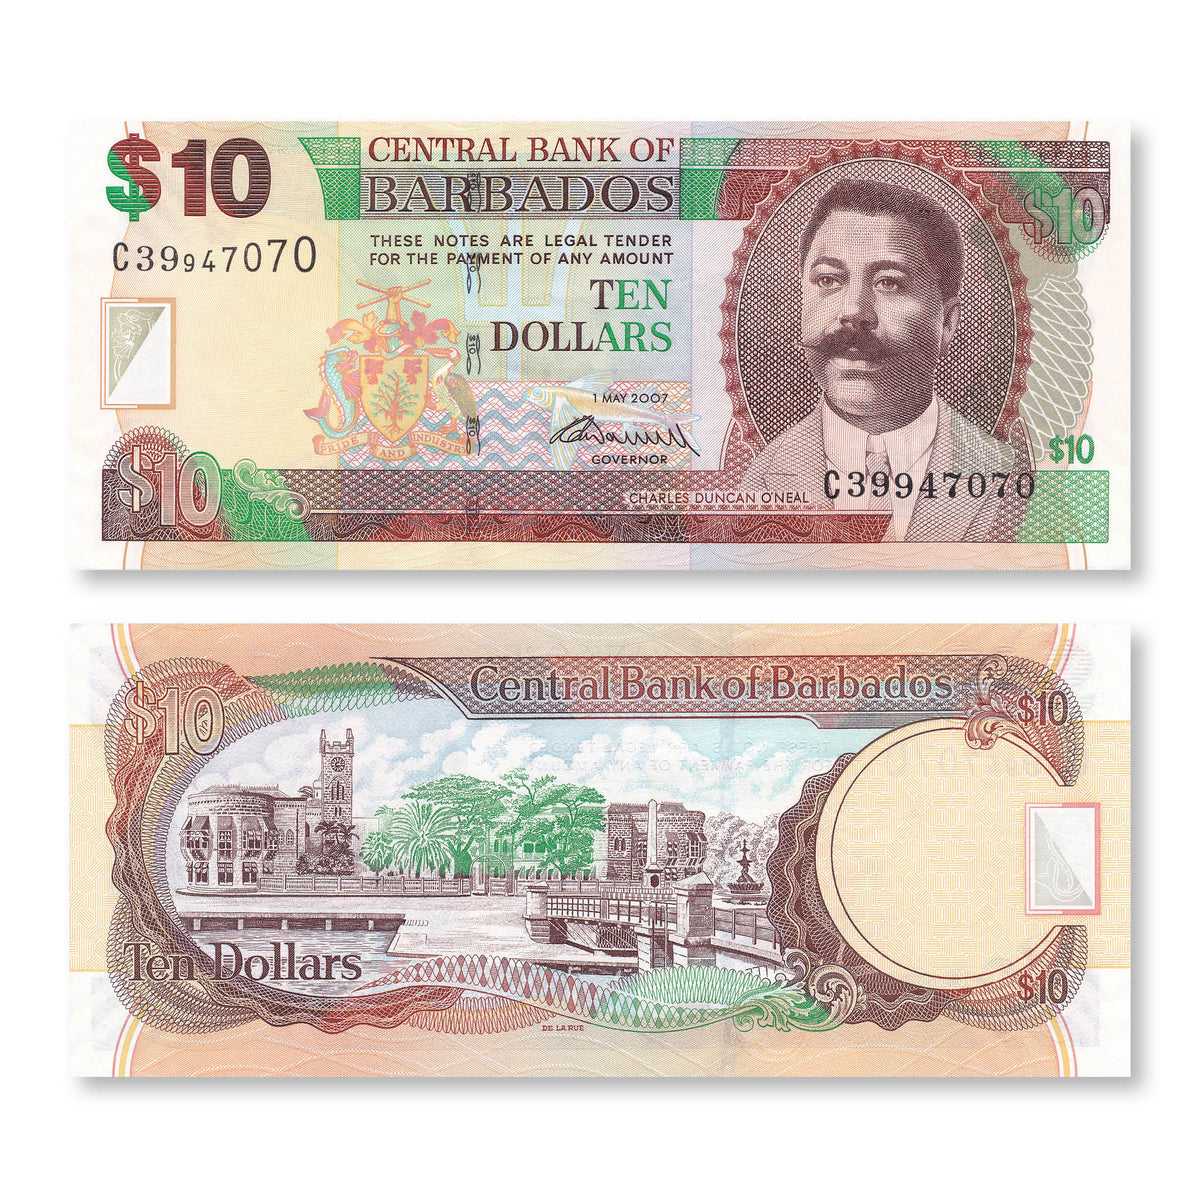 Barbados 10 Dollars, 2007, B227a, P68a, UNC - Robert's World Money - World Banknotes